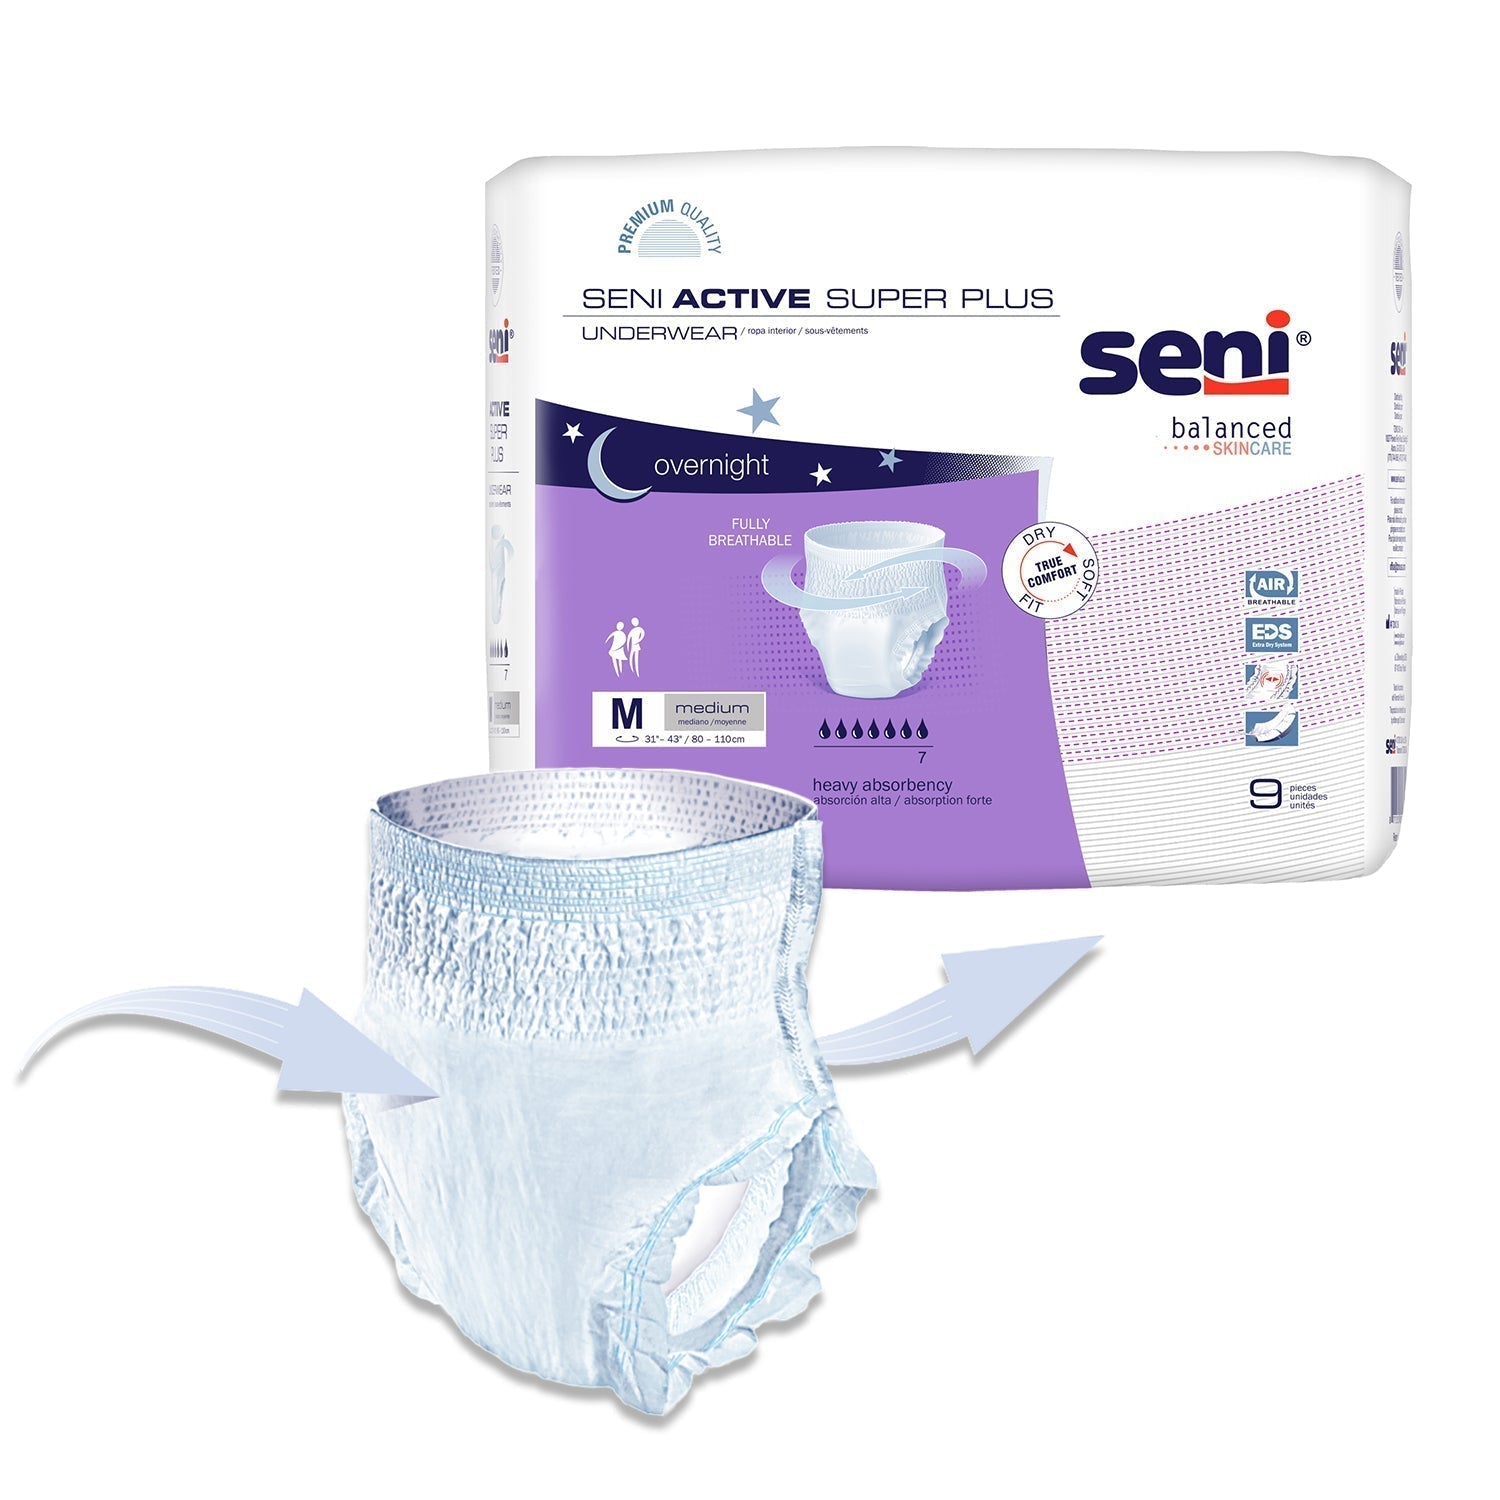 Trial Pack of Seni Active Super Plus Underwear - X-Large